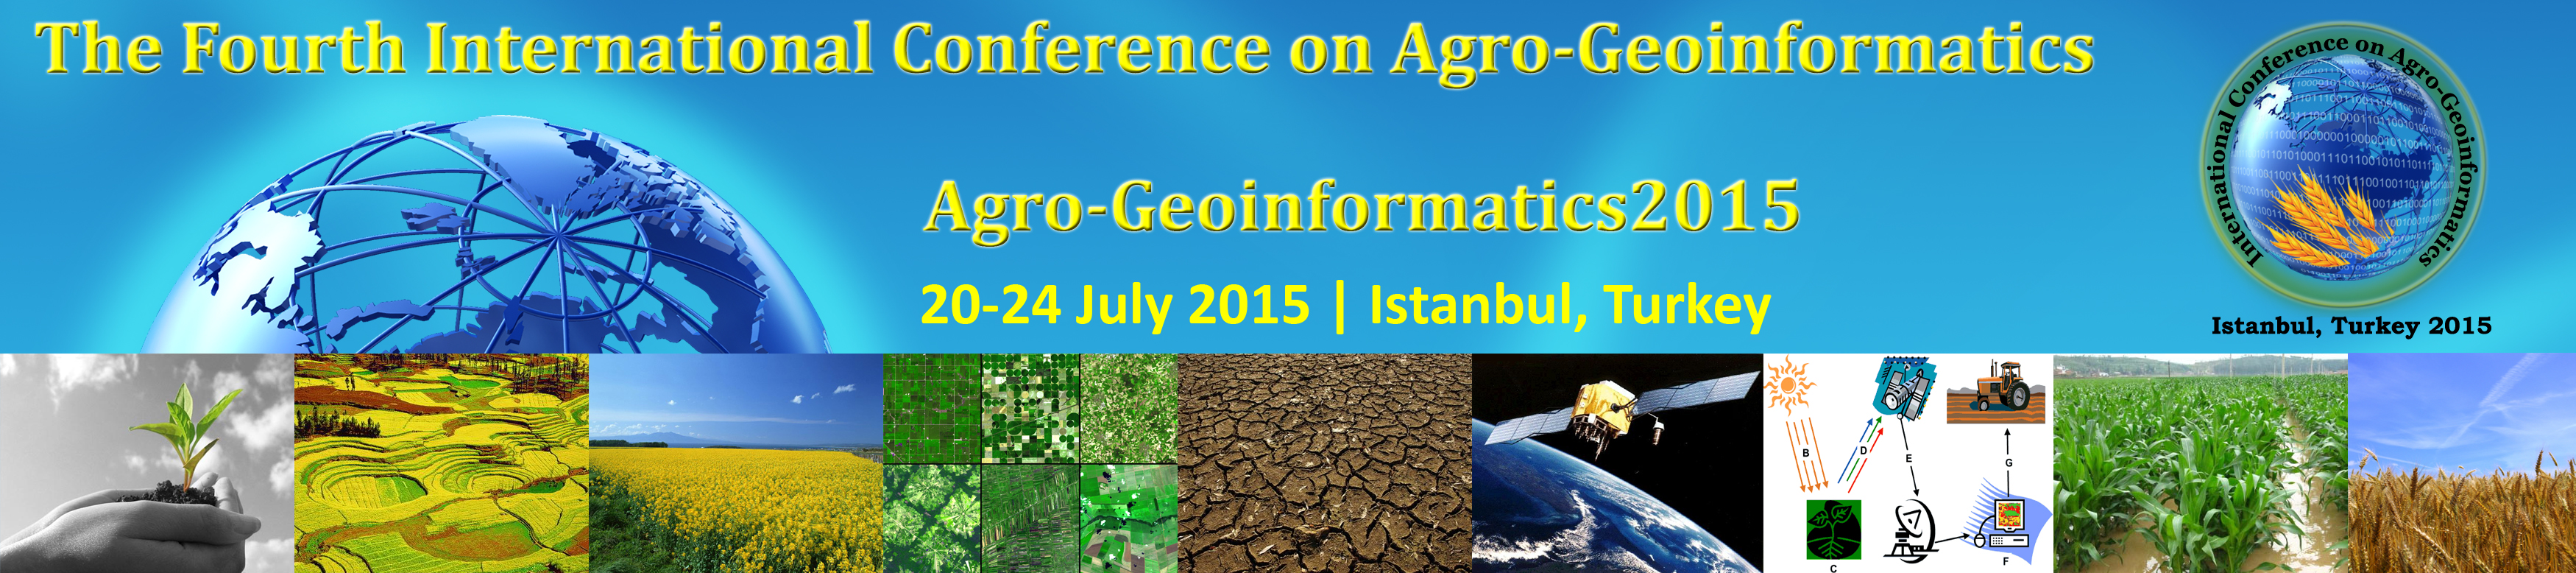 Agro-Geoinformatics 2015